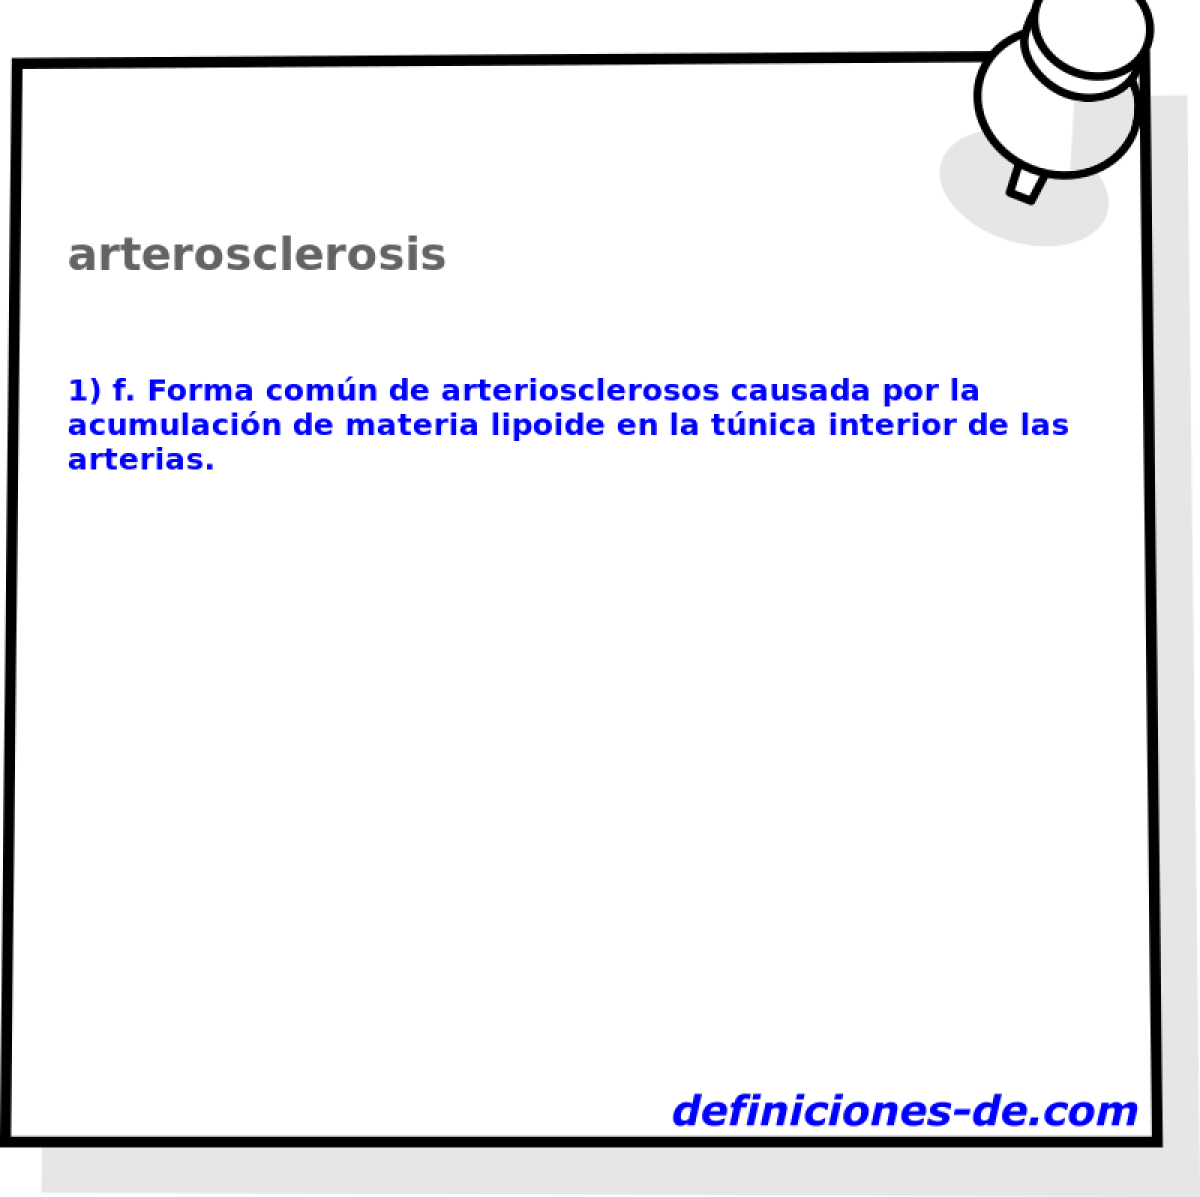 arterosclerosis 